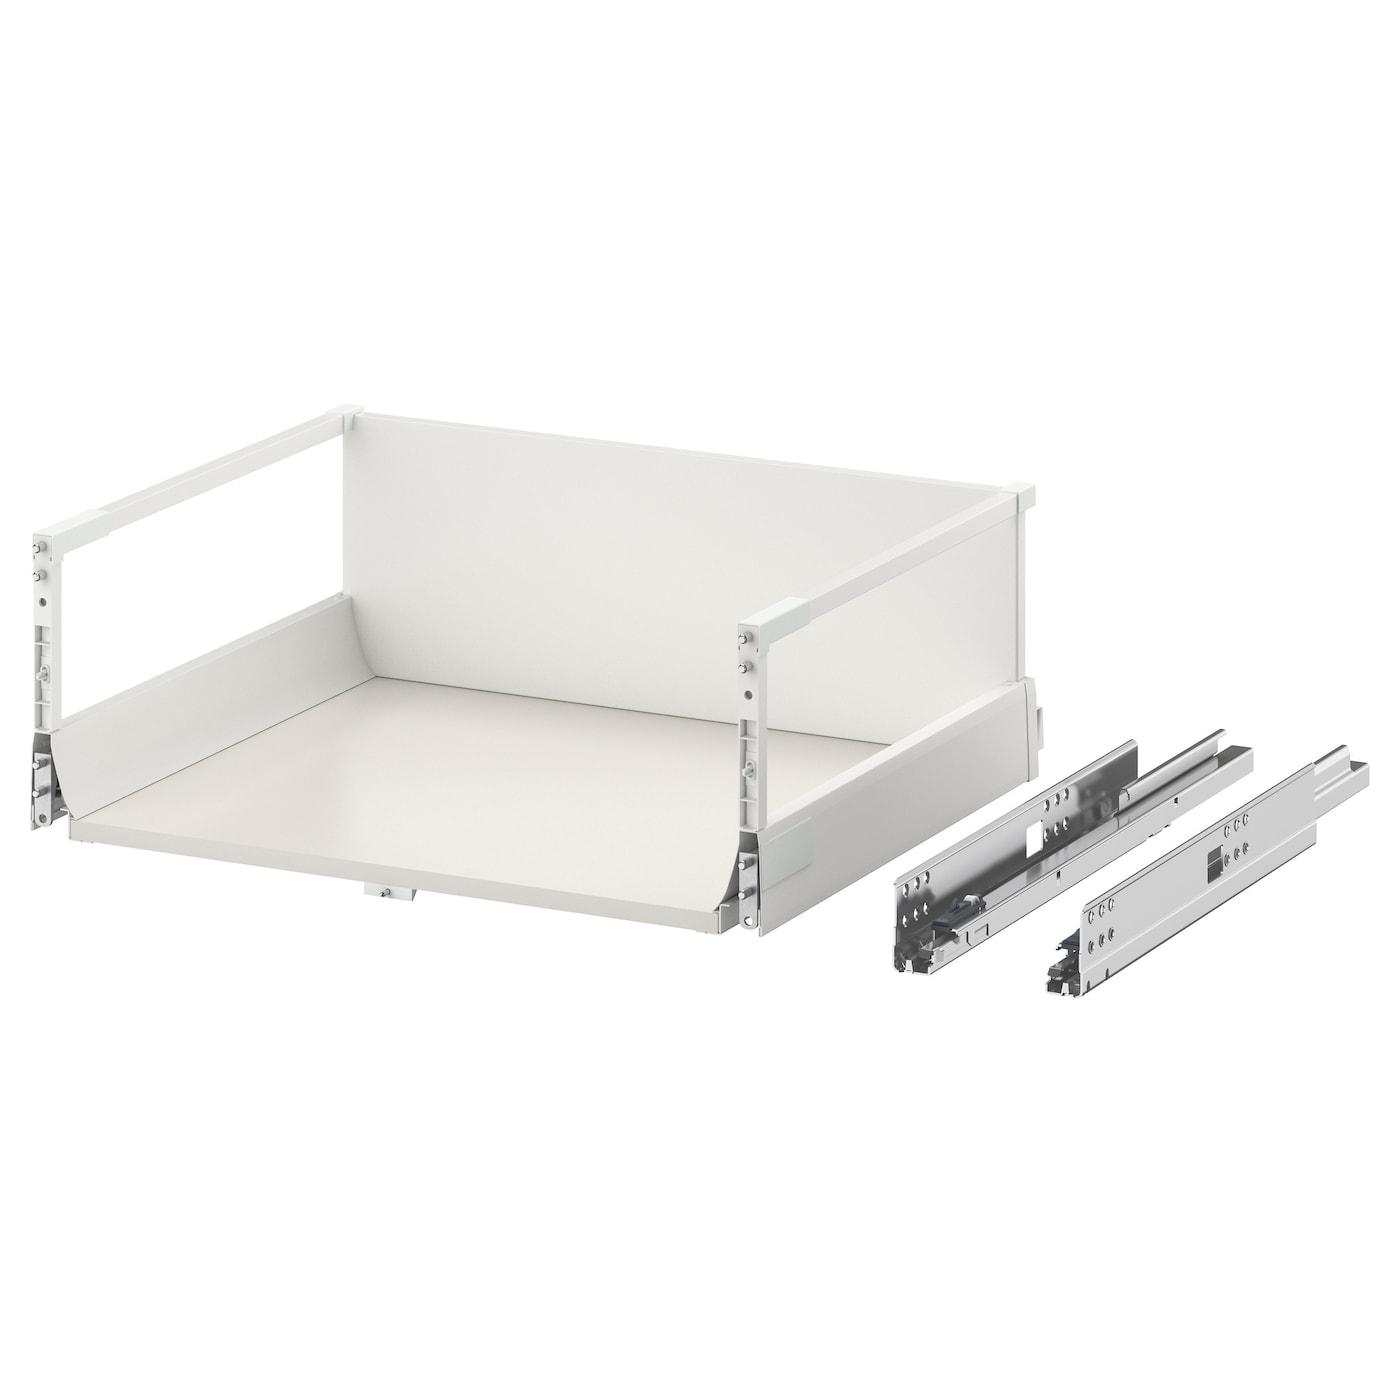 Выдвижной ящик  - EXCEPTIONELL IKEA/ ЭКСЕПТИОНЕЛЛЬ  ИКЕА, 56,5х21,2 см, белый